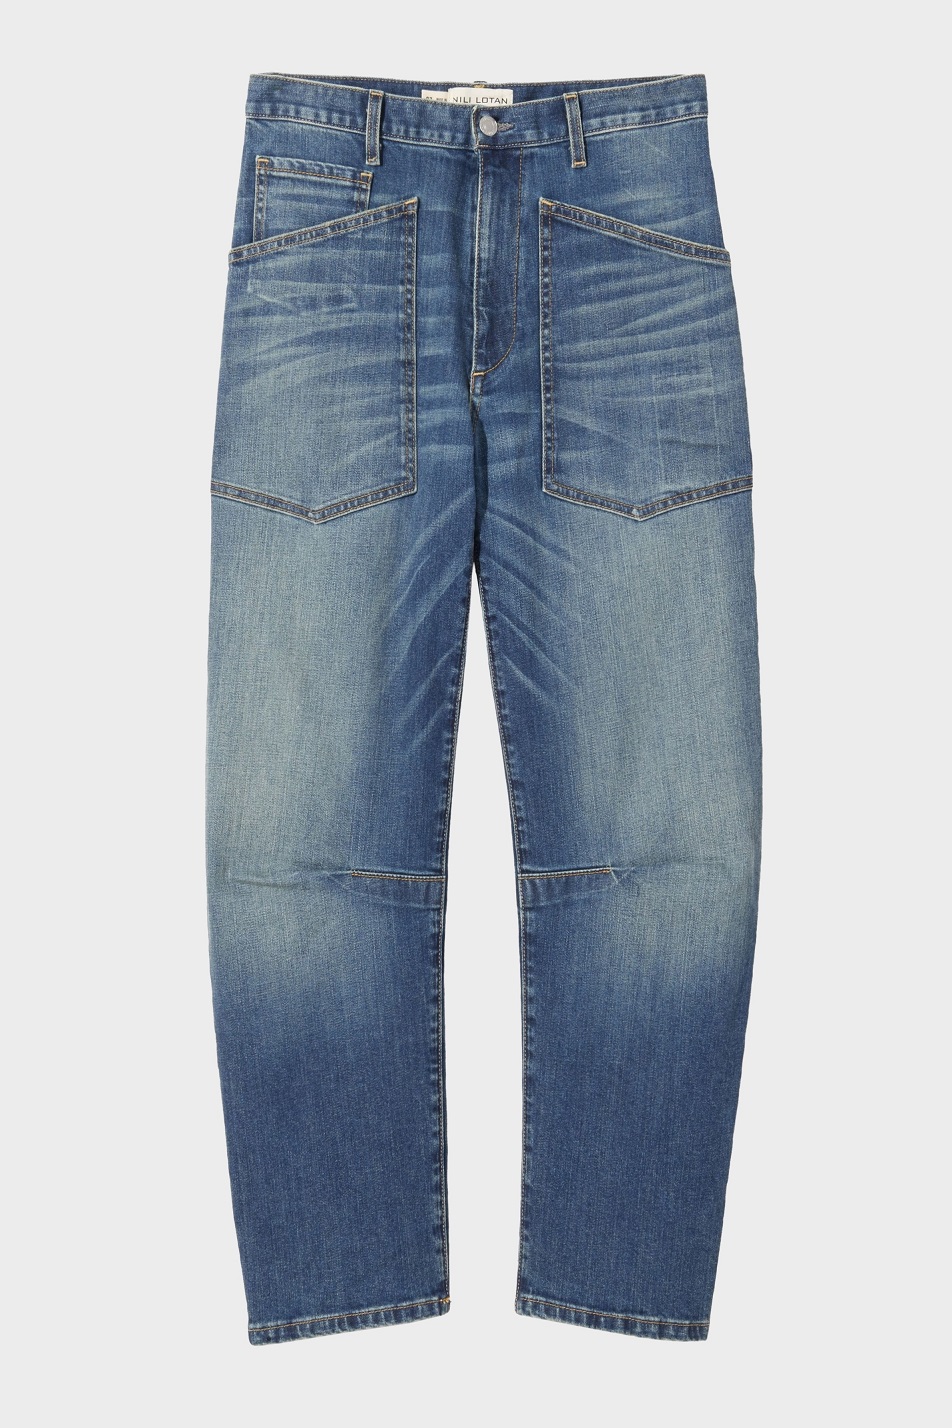 NILI LOTAN Shon Jeans in Classic Wash 28